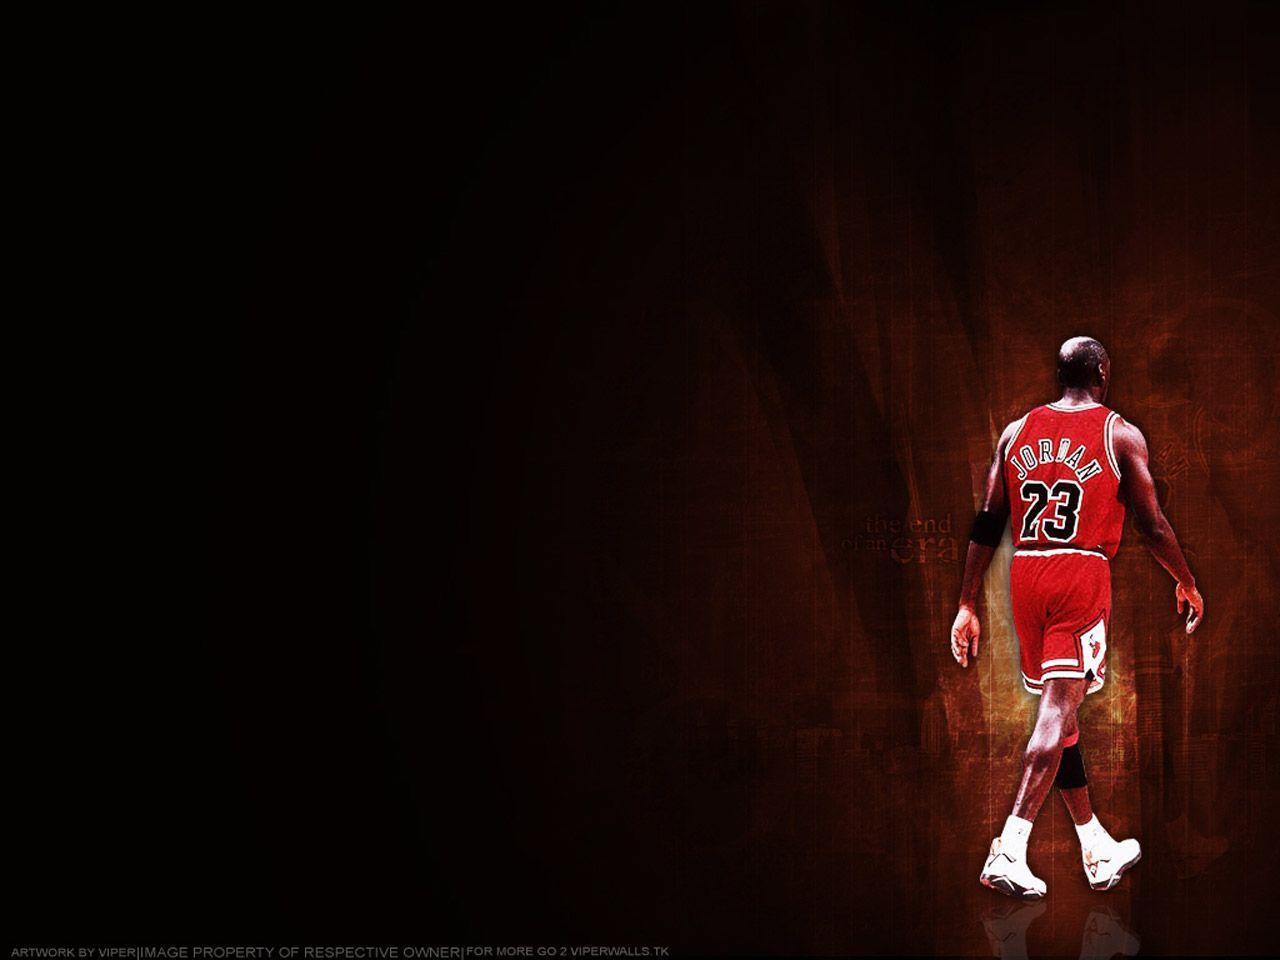 Of The Best Michael Jordan Wallpaper!. Kobe Bryant is